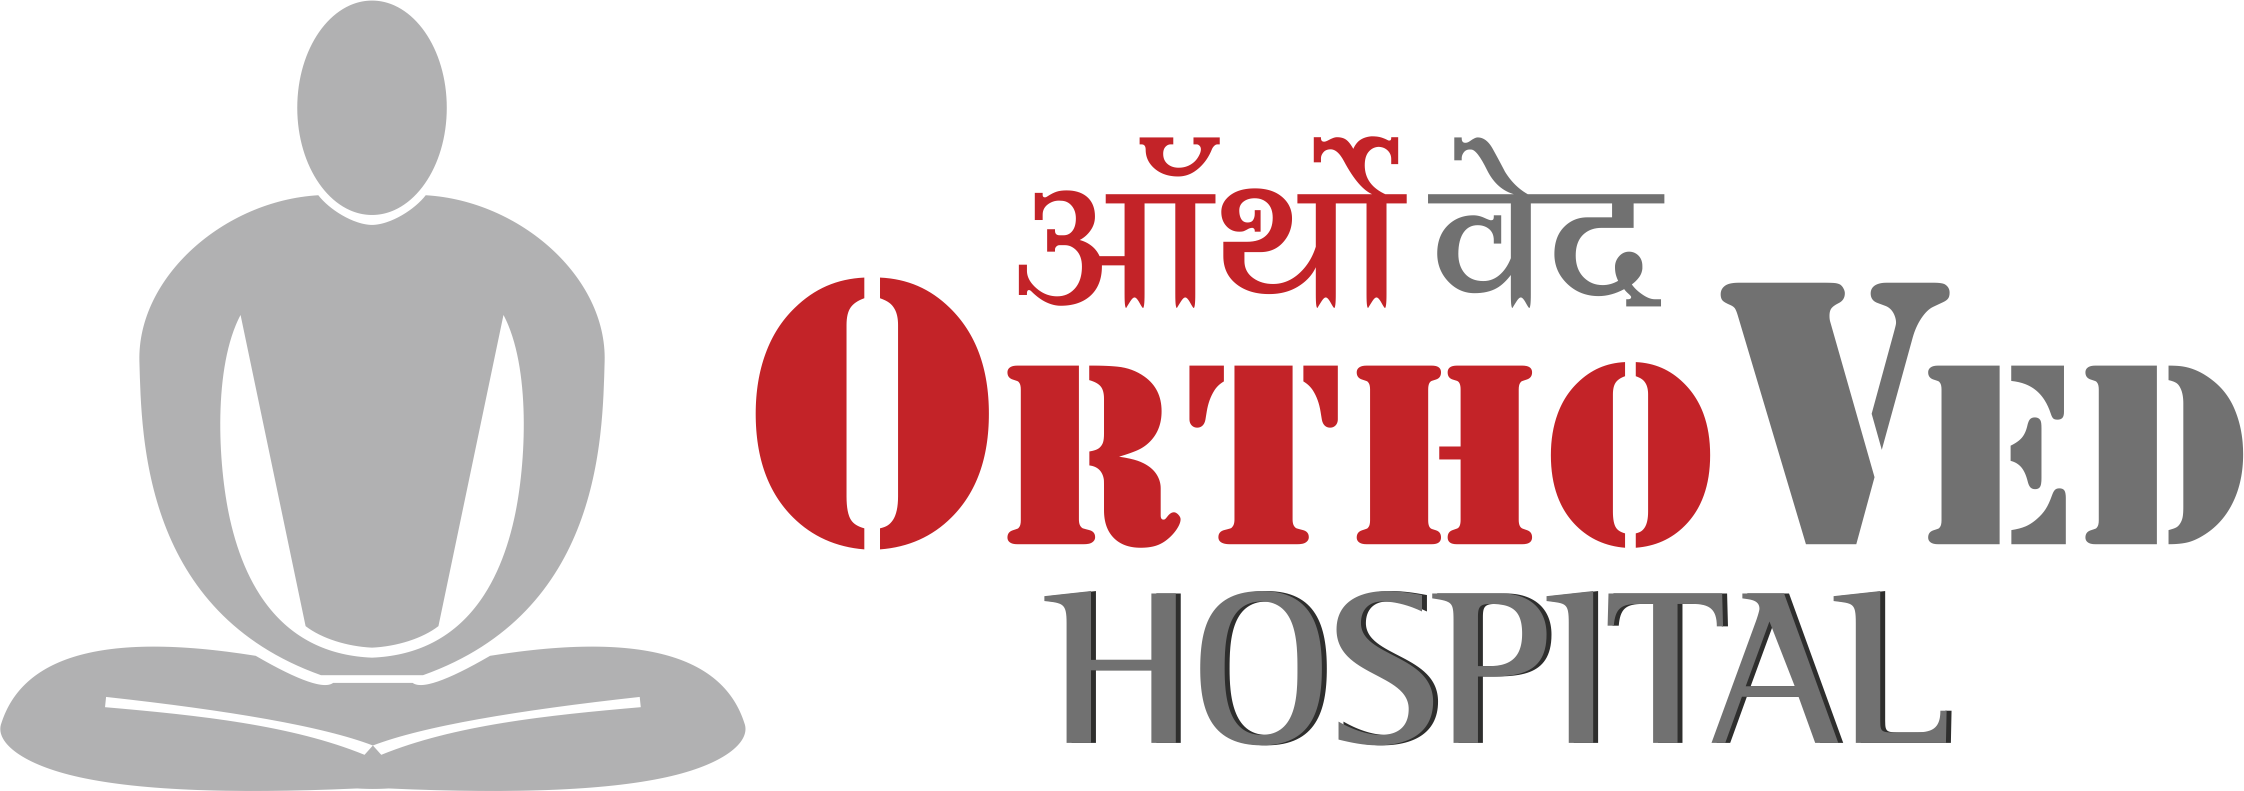 Orthoved hospital